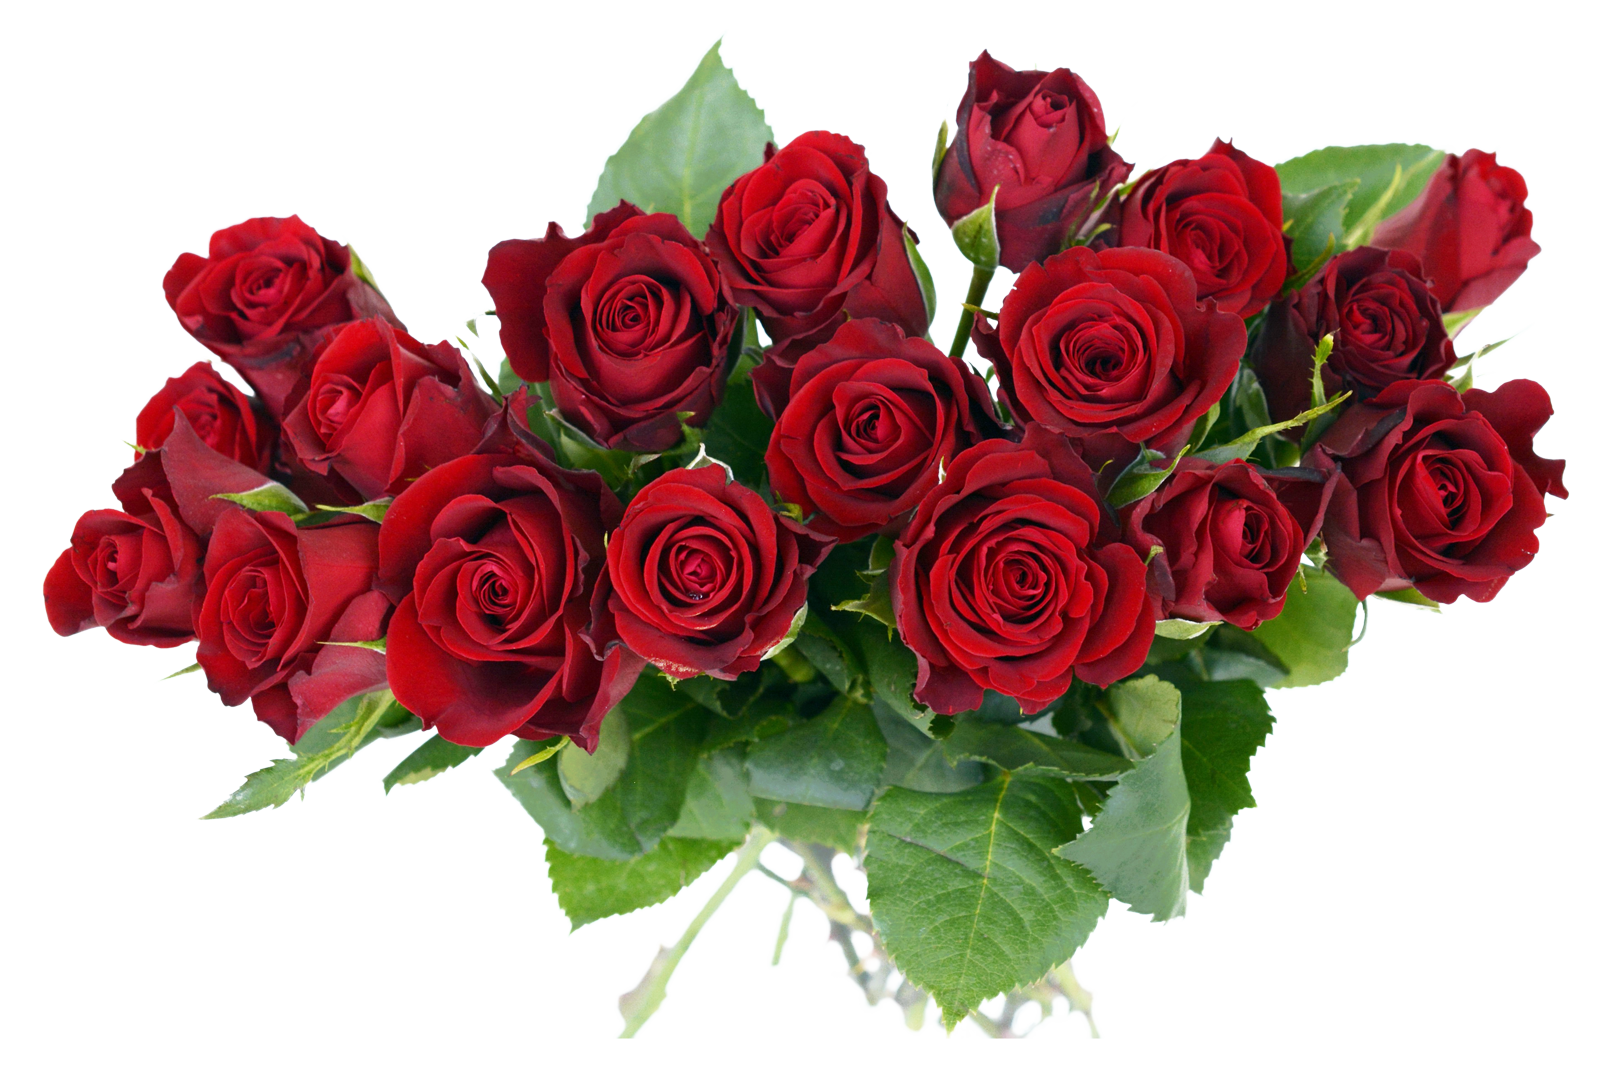 Rose Bouquet PNG Image.